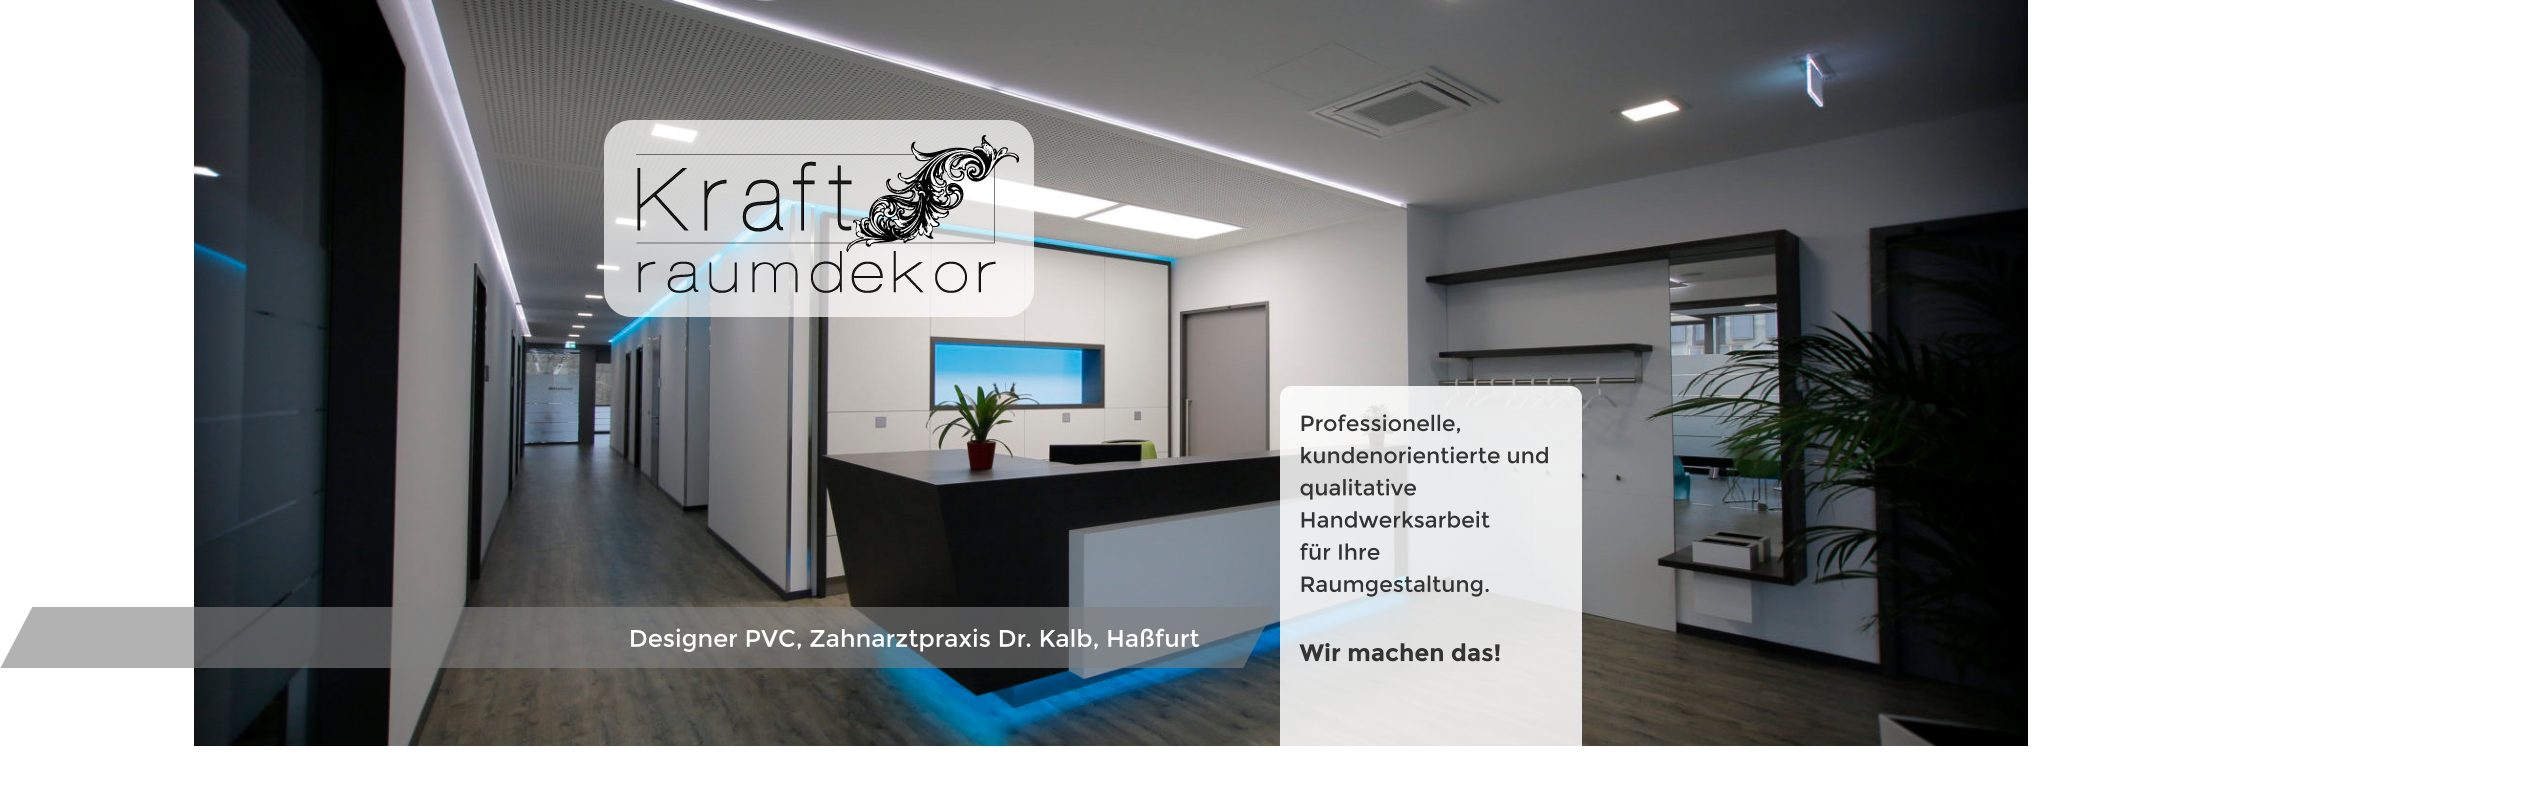 Designer PVC, Zahnarztpraxis Dr. Kalb, Haßfurt Kraftraumdekor Professionelle, kundenorientierte und qualitative Handwerksarbeit für Ihre Raumgestaltung.Wir machen das!